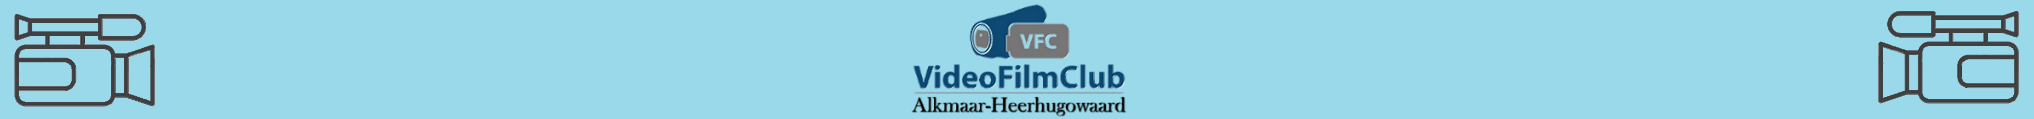 Videofilmclub Alkmaar Heerhugowaard